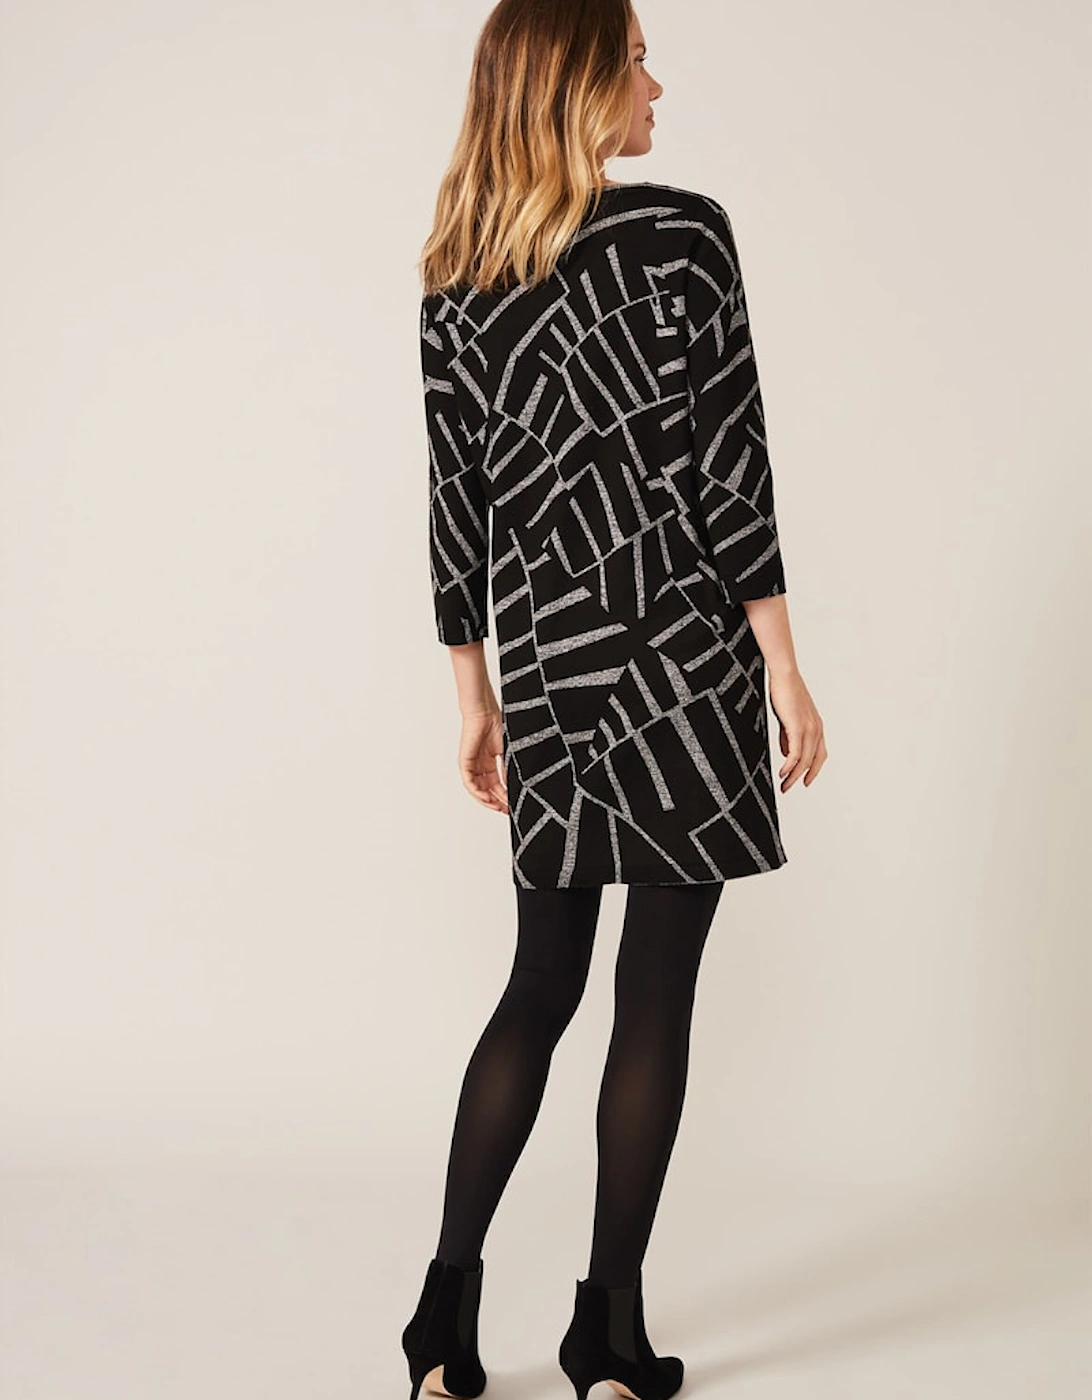 Marthe Abstract Print Knit Dress